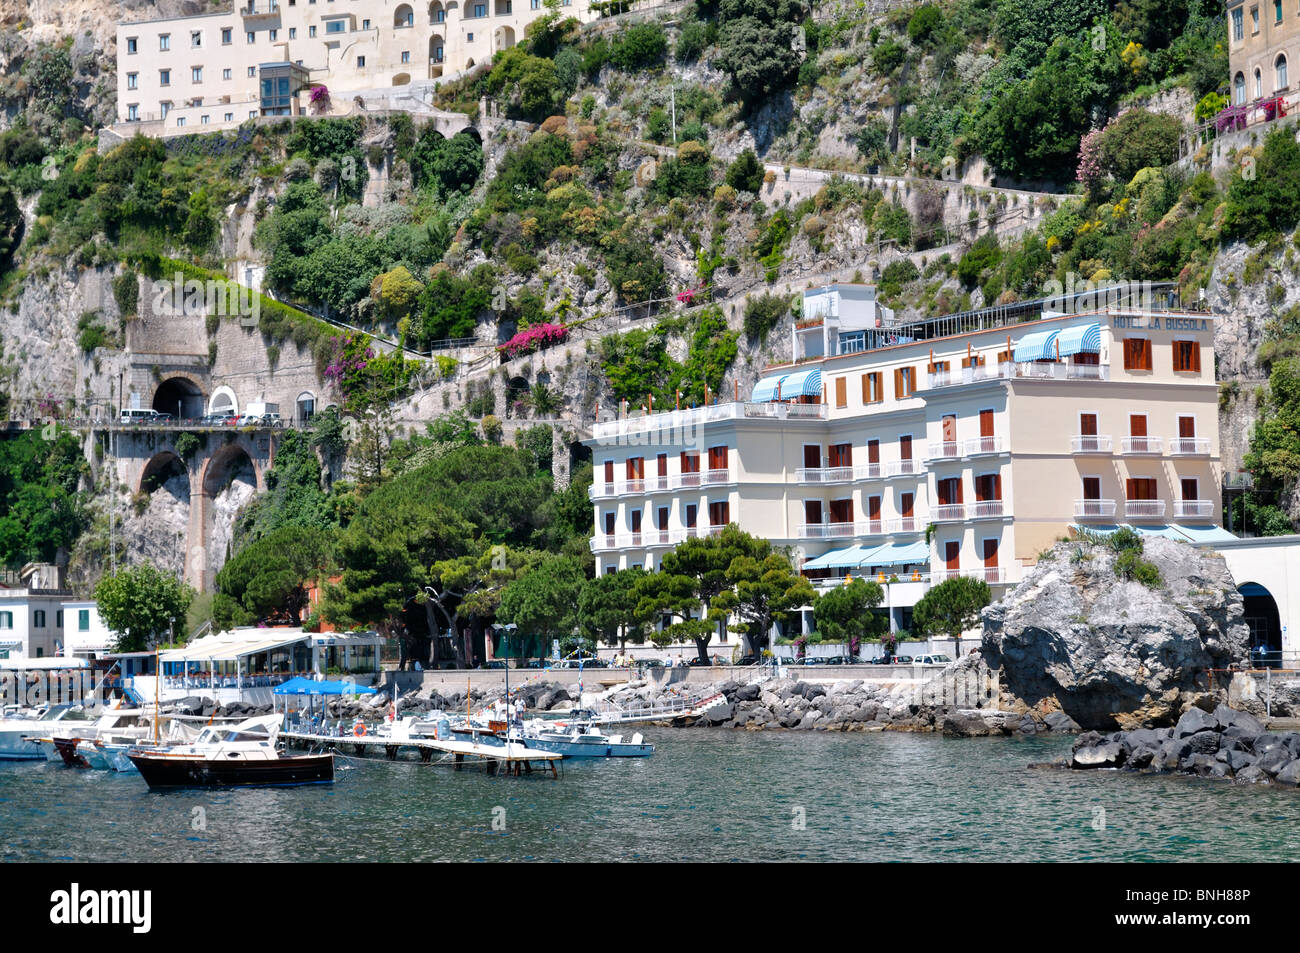 The Hotel La Bussola in Amalfi Stock Photo - Alamy